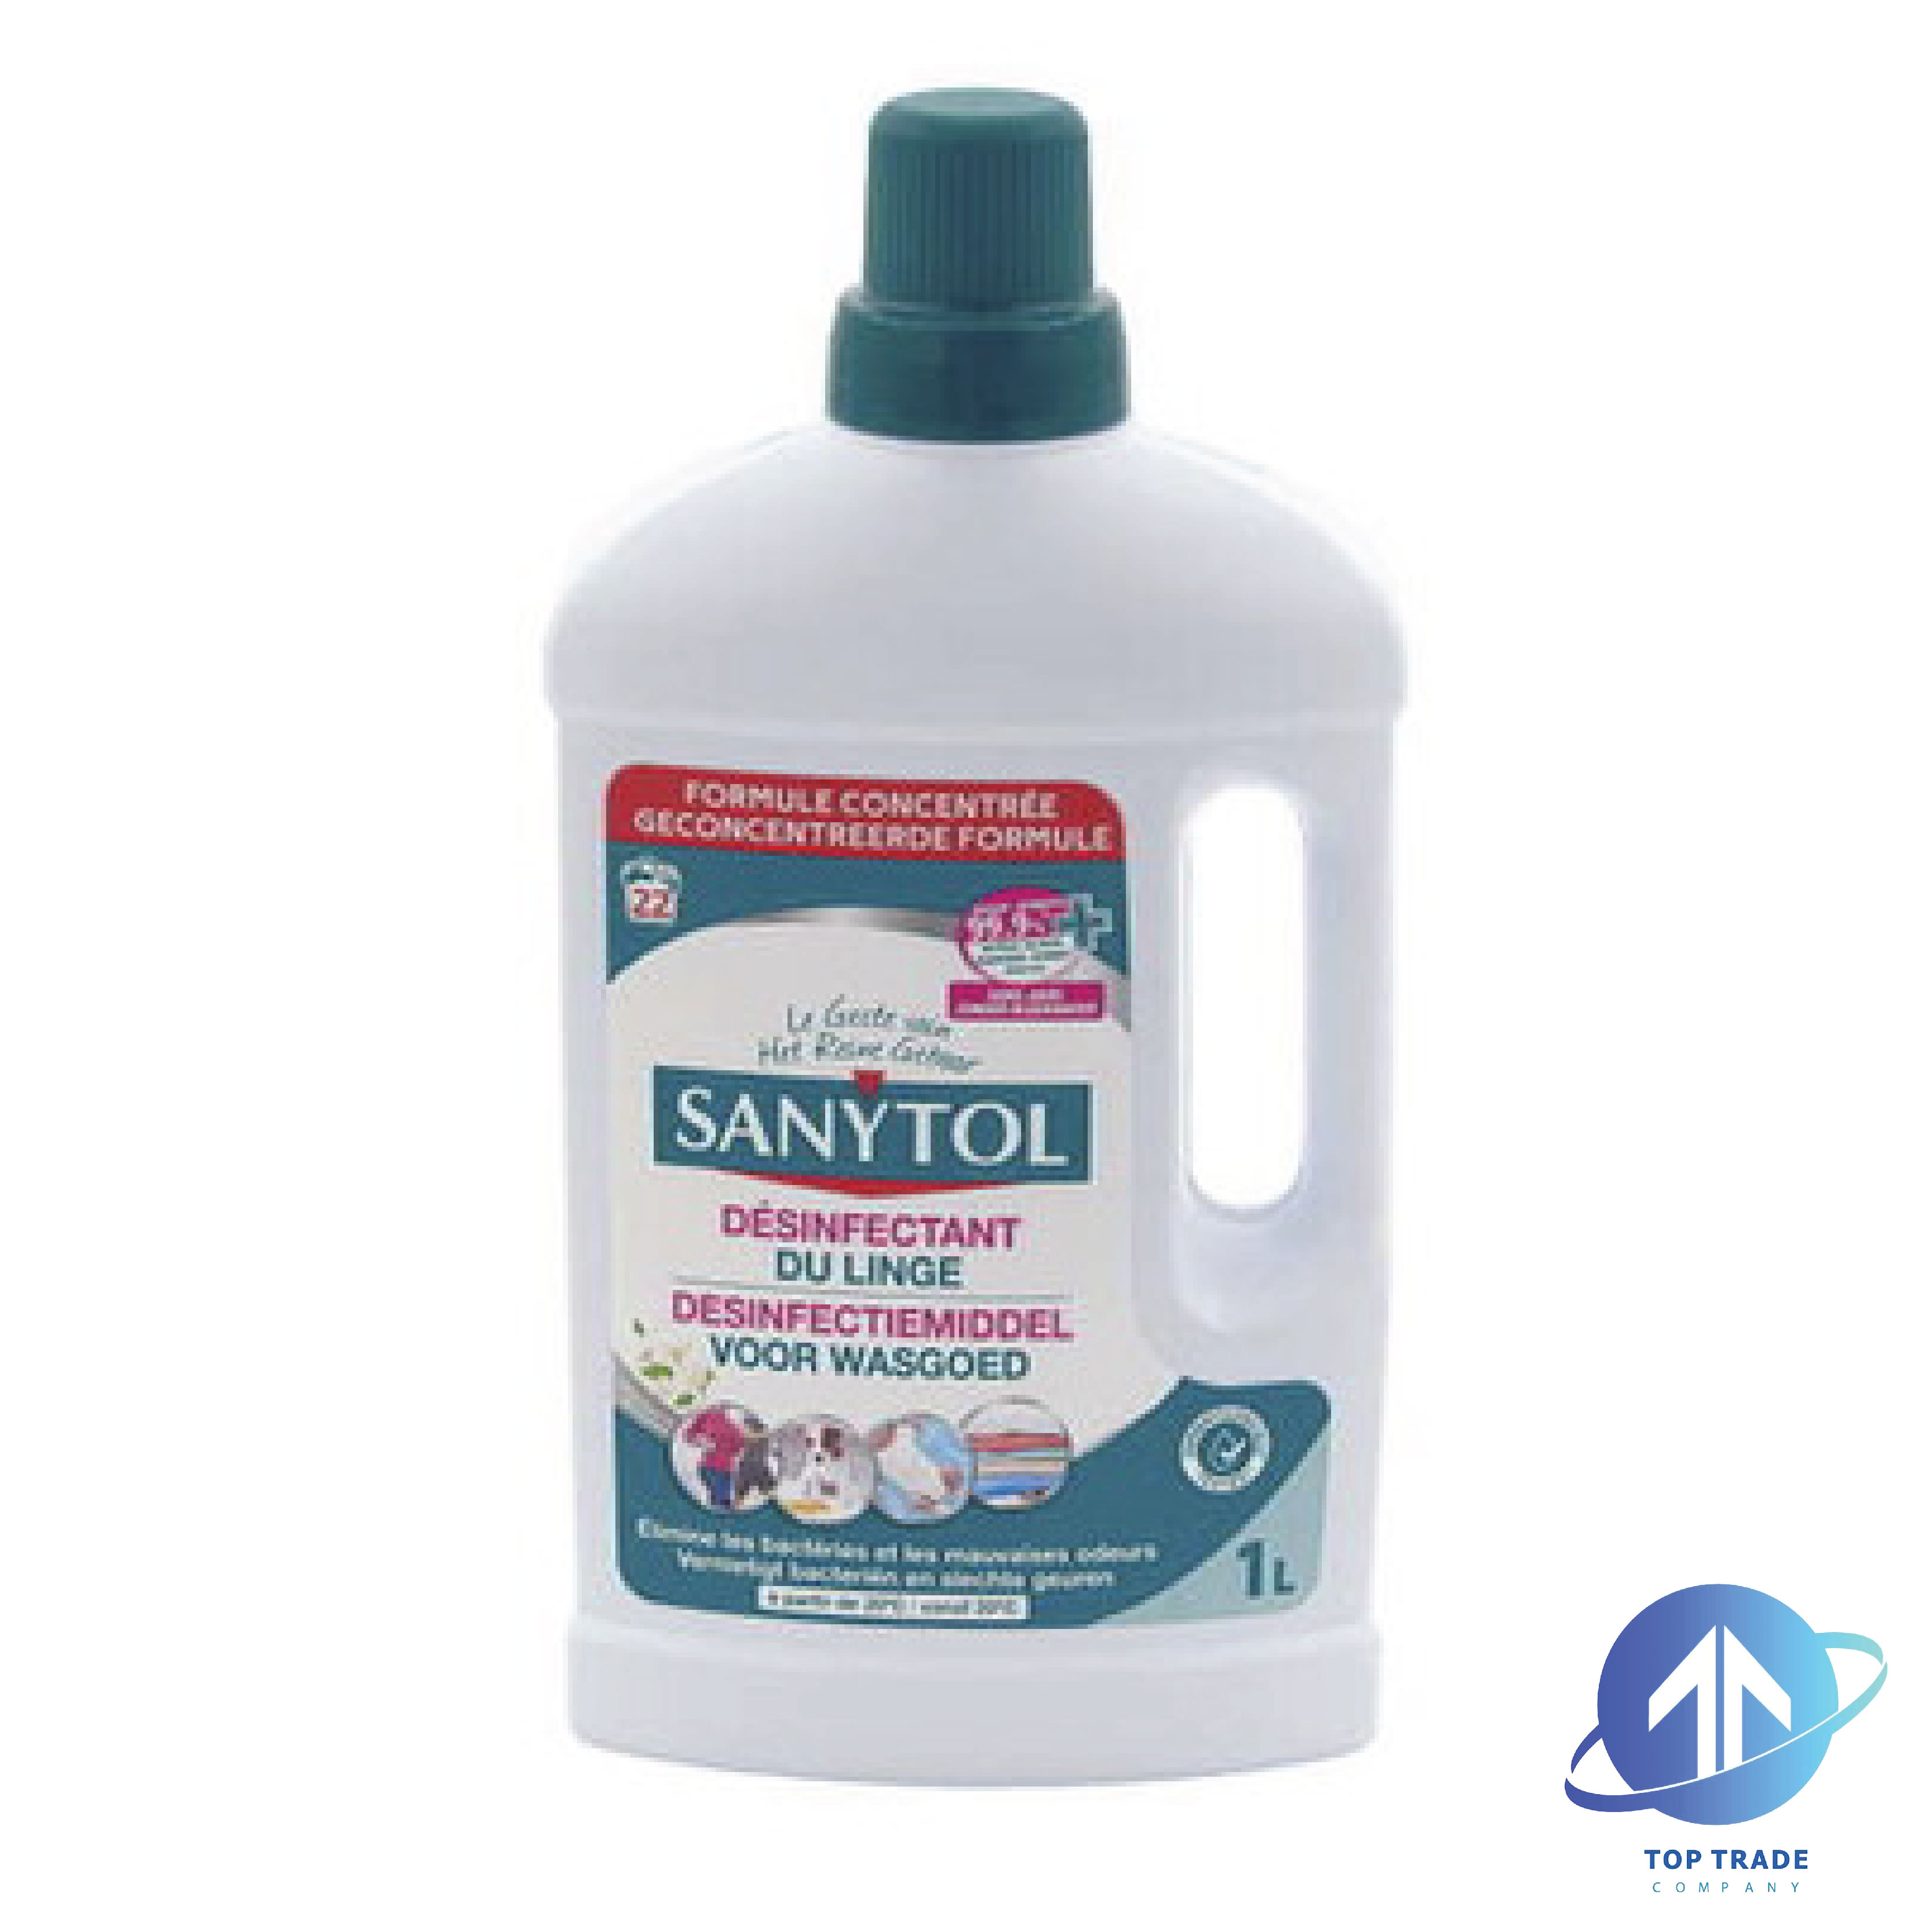 Sanytol laundry disinfectant 1L